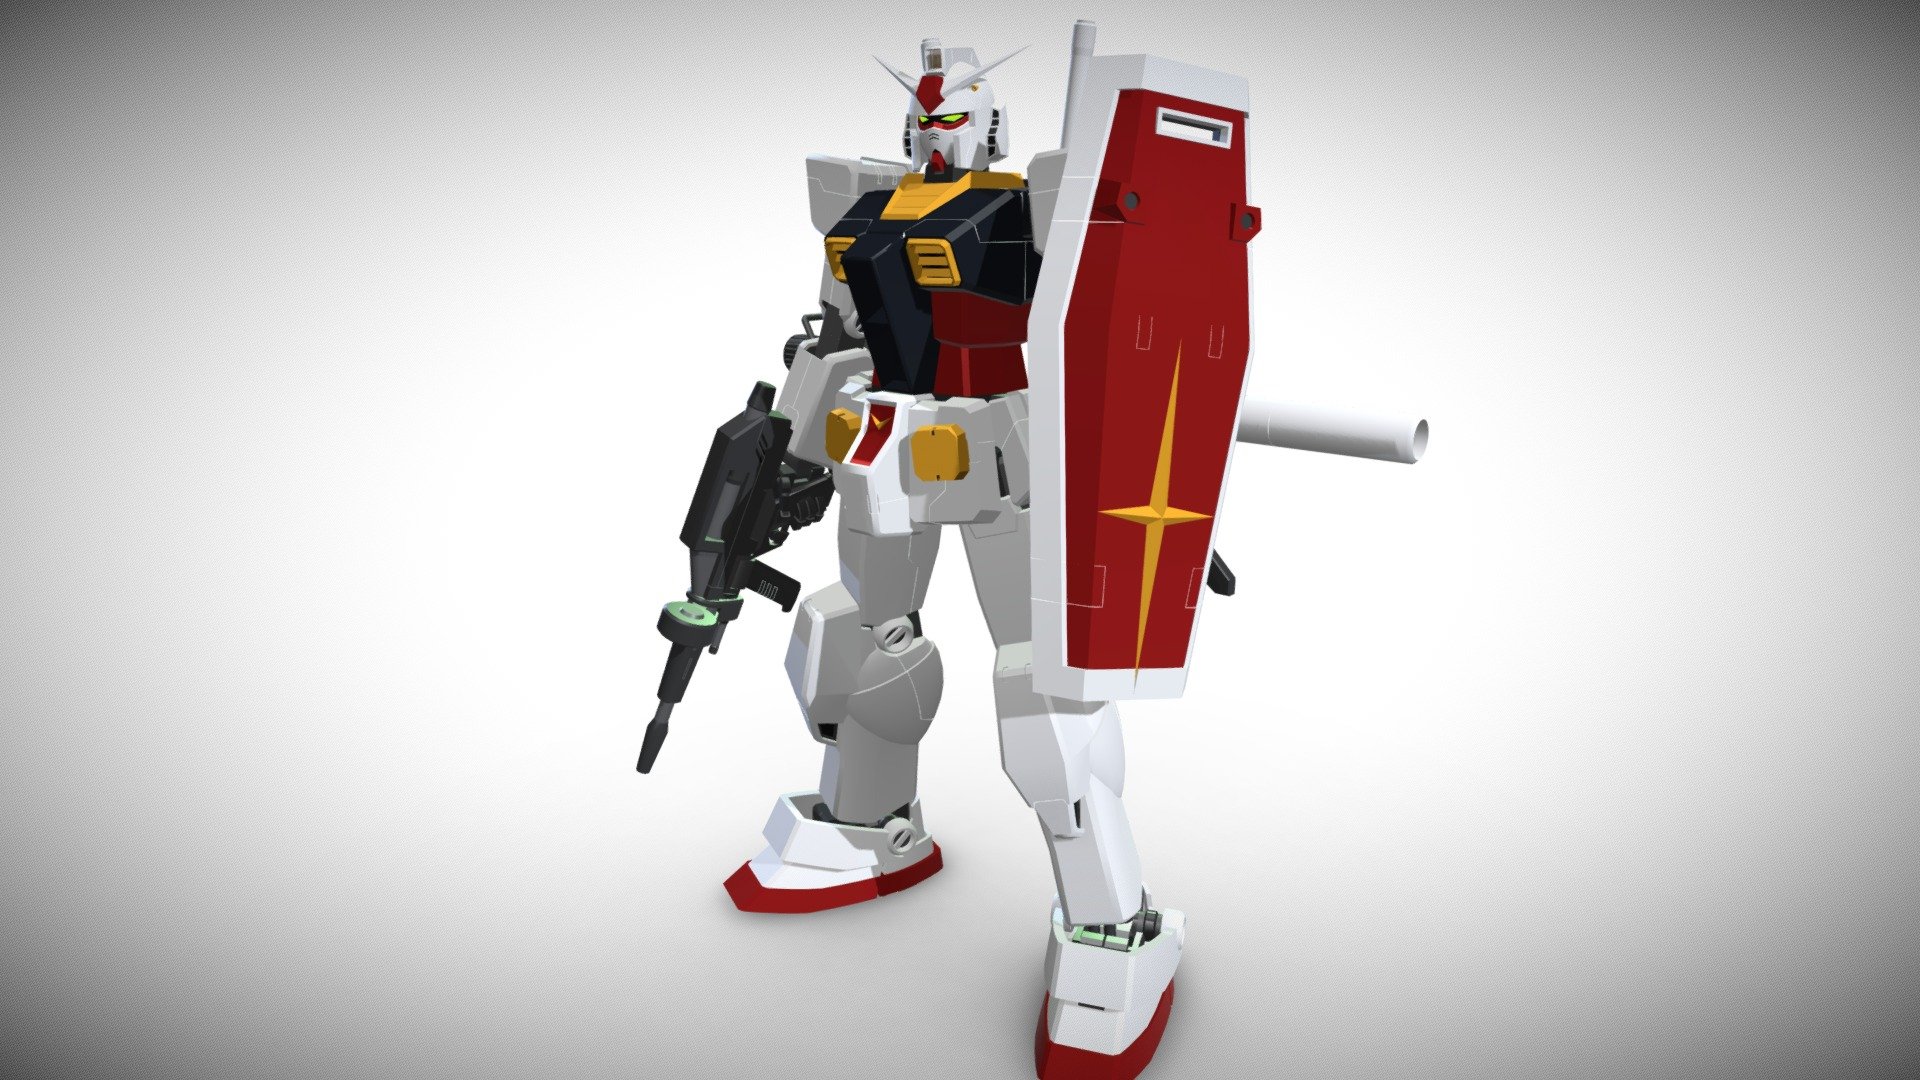 Gundam Rx-78-2 - 3D model by krit yamsaso (กฤษณ์ แย้มสระโส 